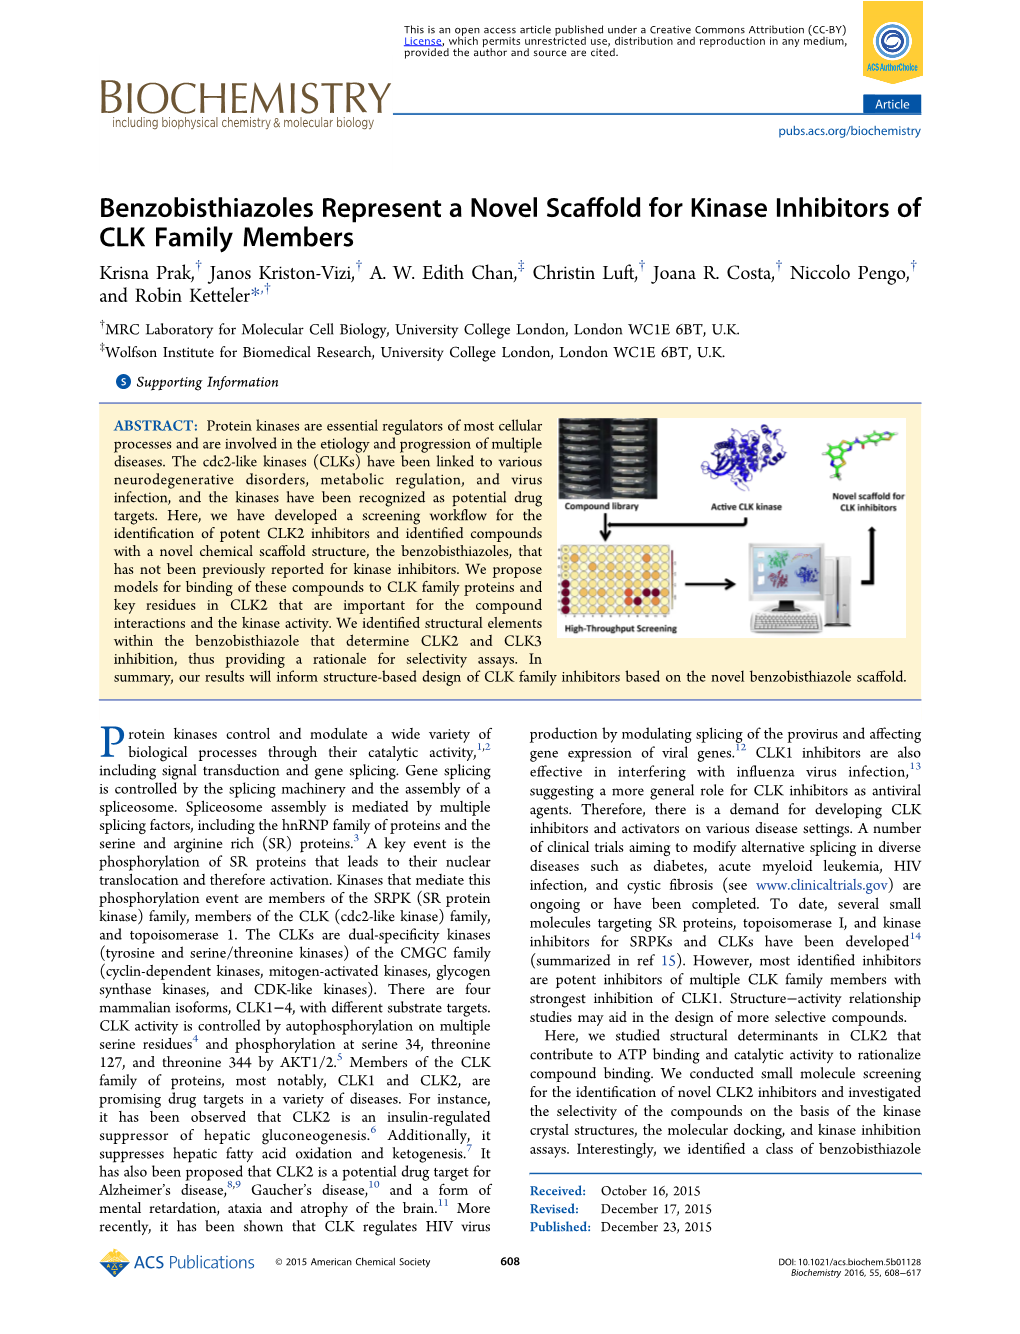 Benzobisthiazoles Represent a Novel Scaffold for Kinase Inhibitors of CLK